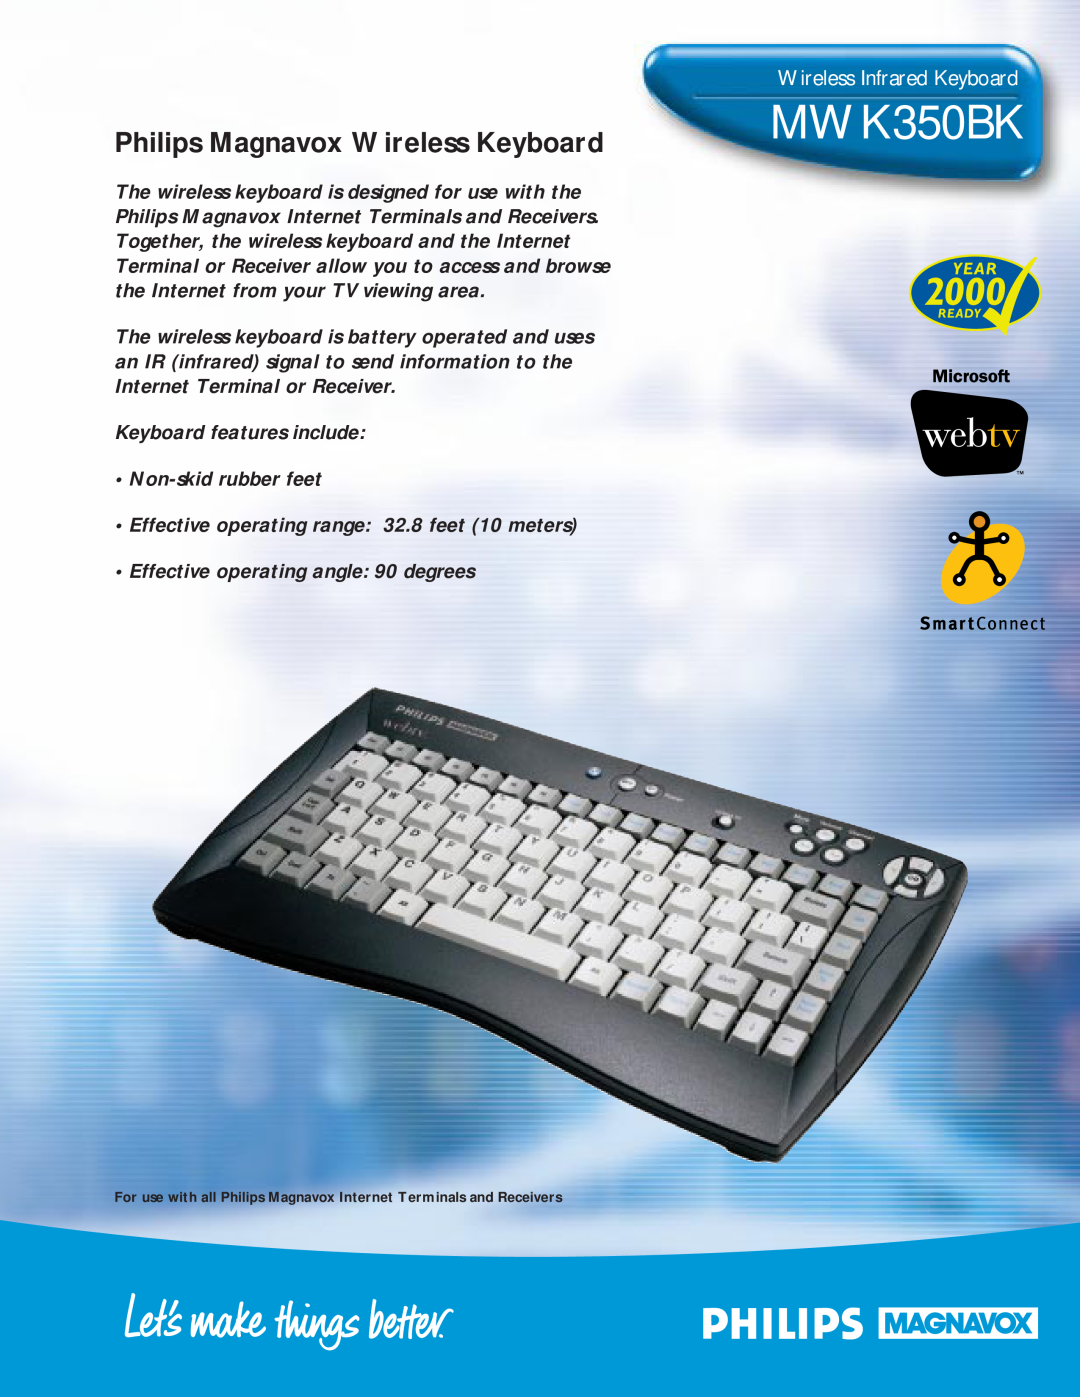 Philips MWK350BK manual Wireless Infrared Keyboard, Philips Magnavox Wireless Keyboard 